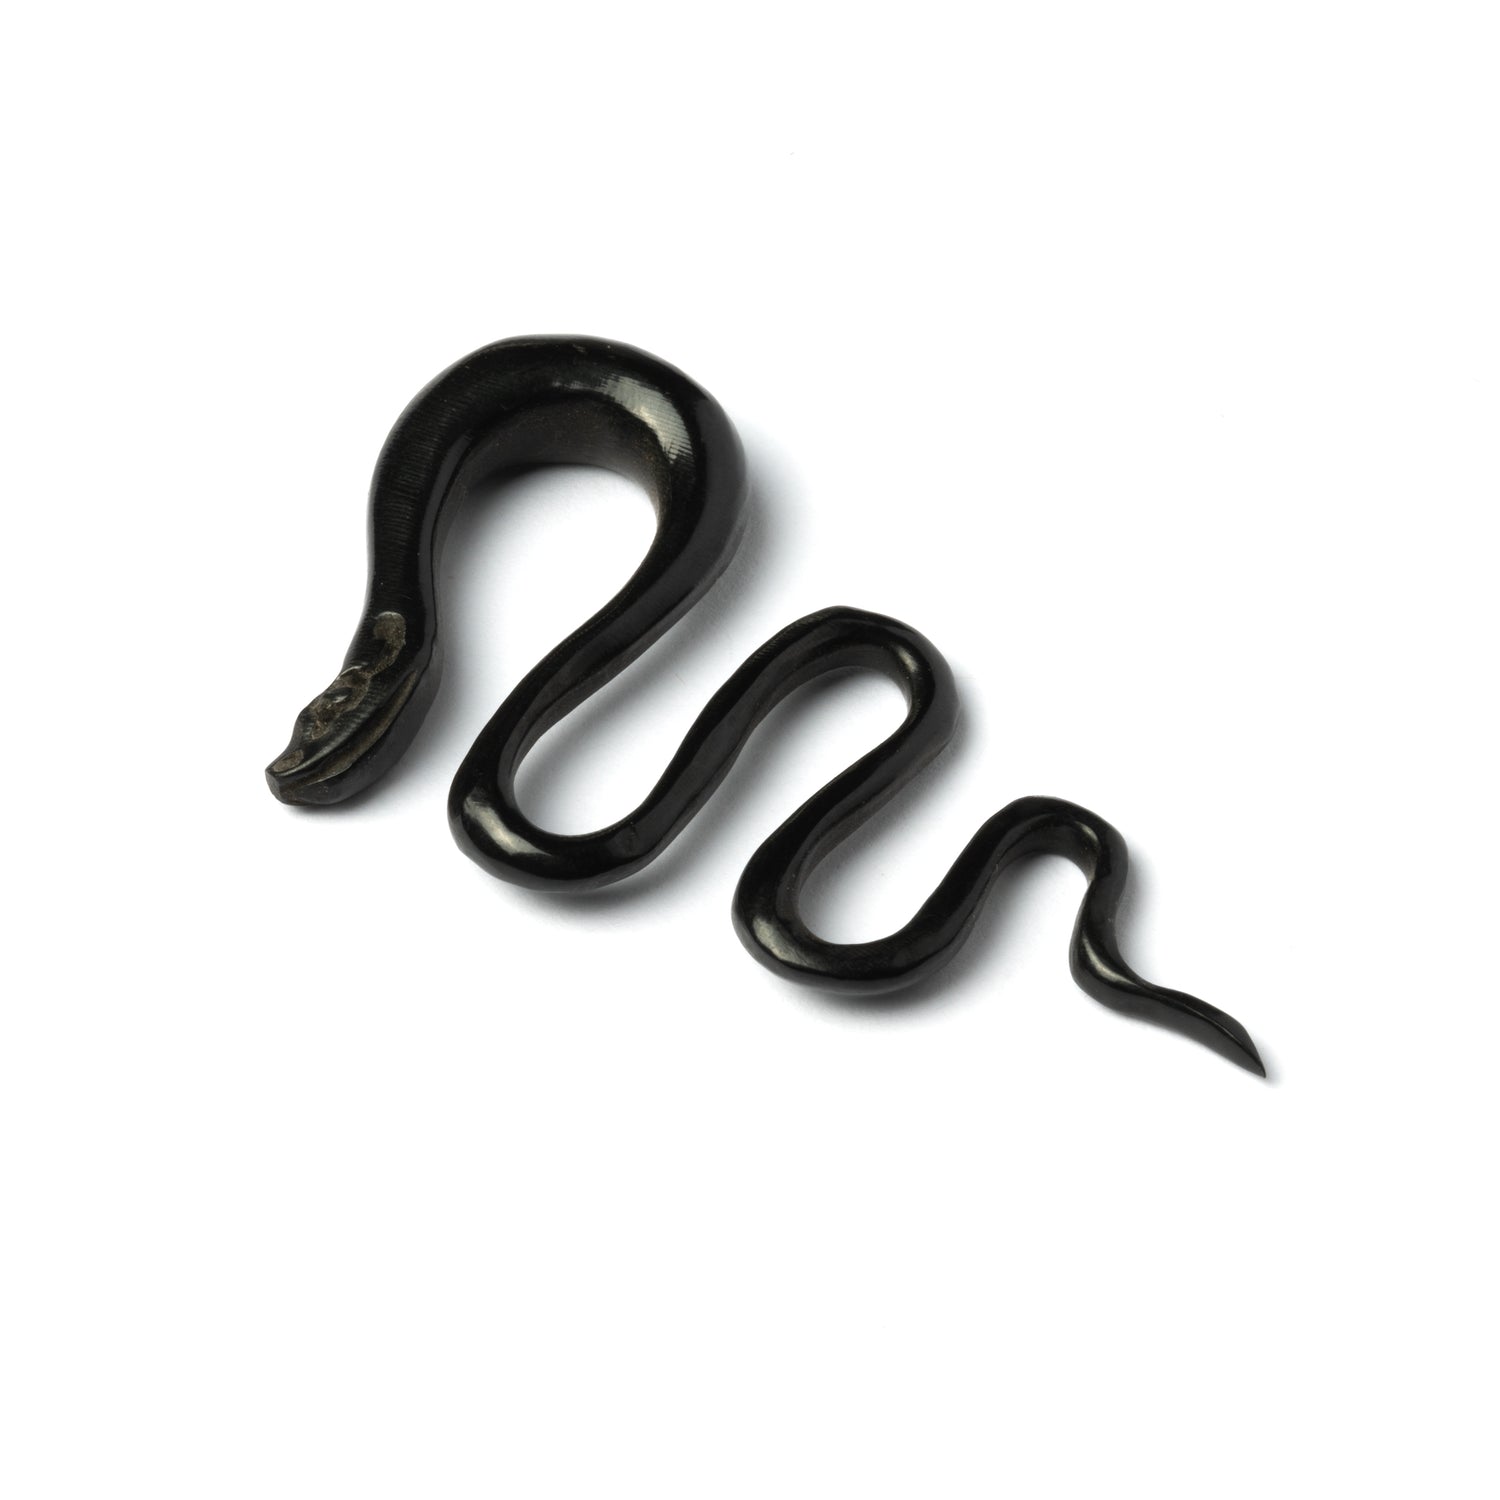 single black horn snake shaped ear stretcher left side view